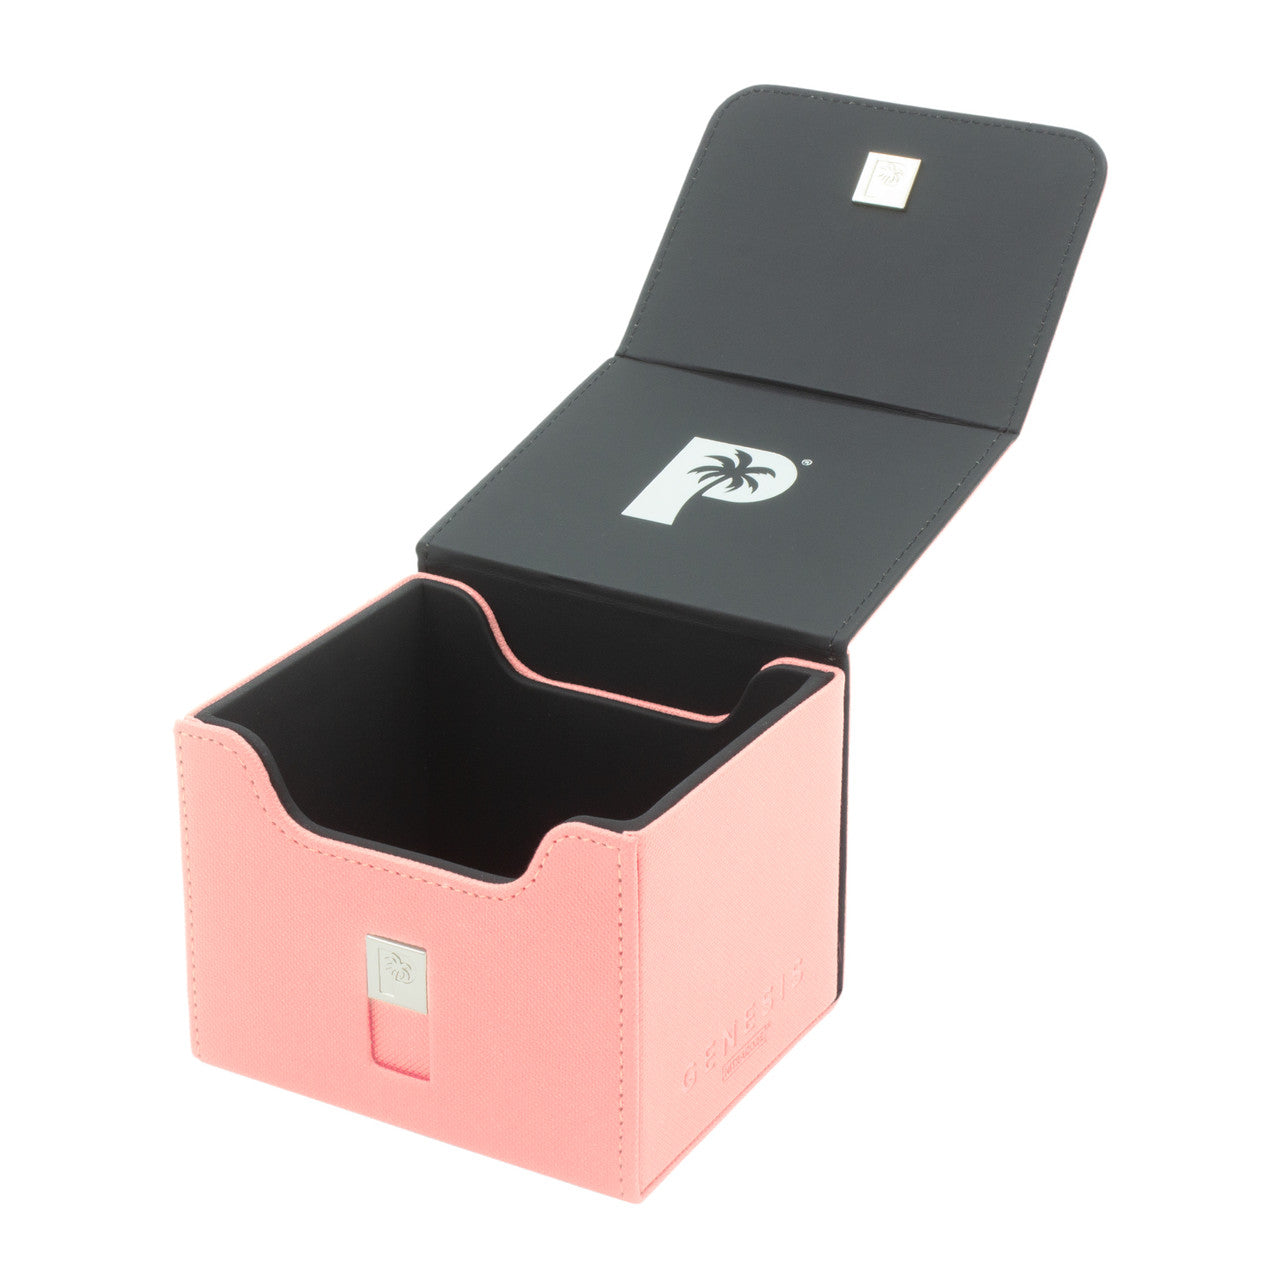 Palms Off Gaming Genesis Deck Box - Pink